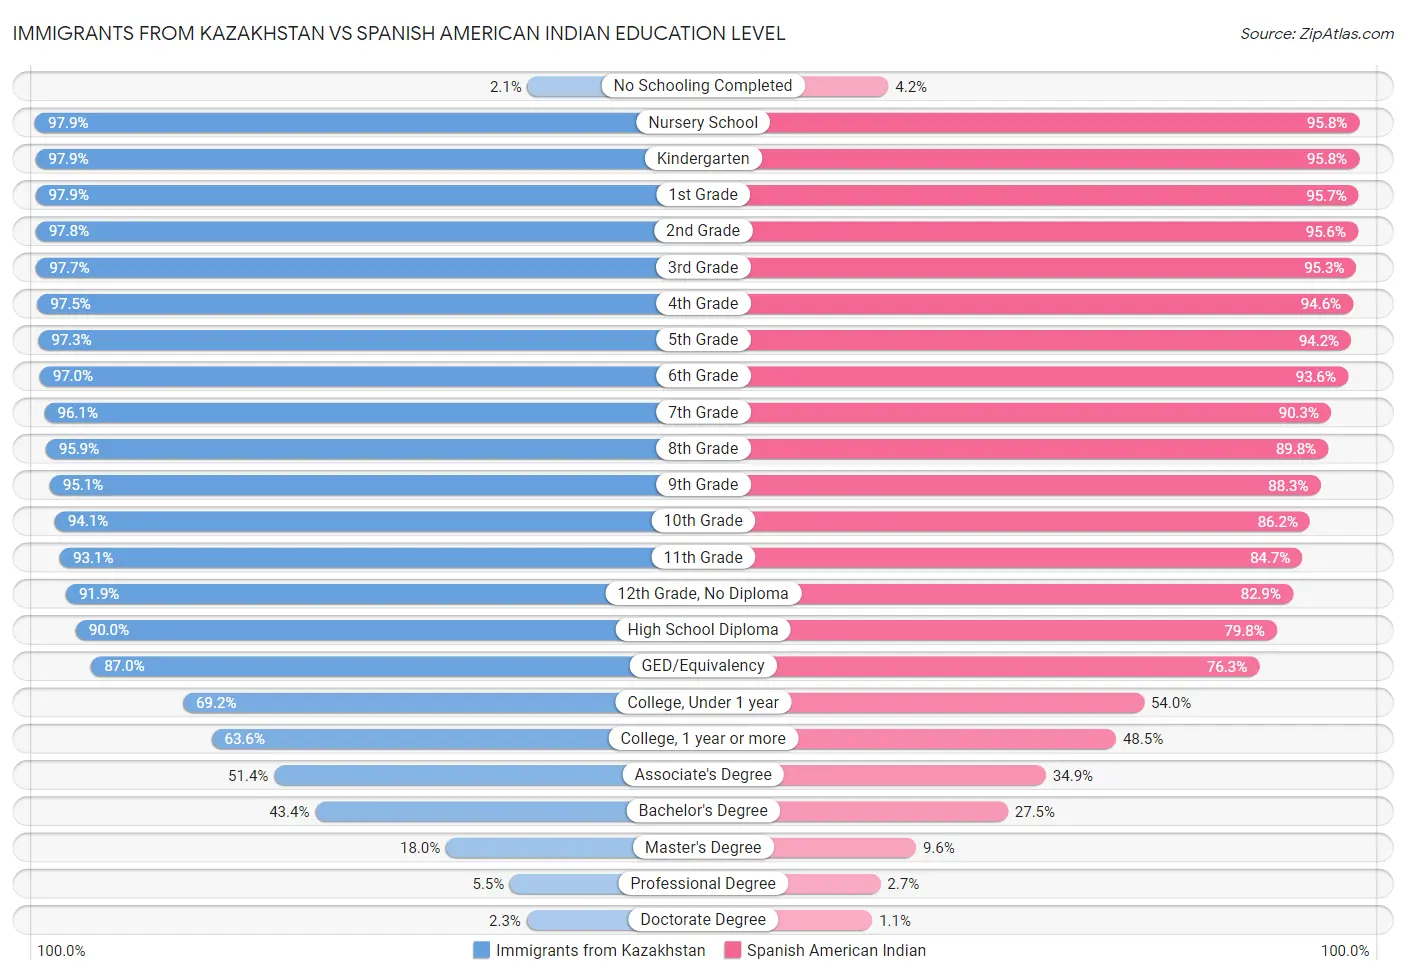 Immigrants from Kazakhstan vs Spanish American Indian Education Level